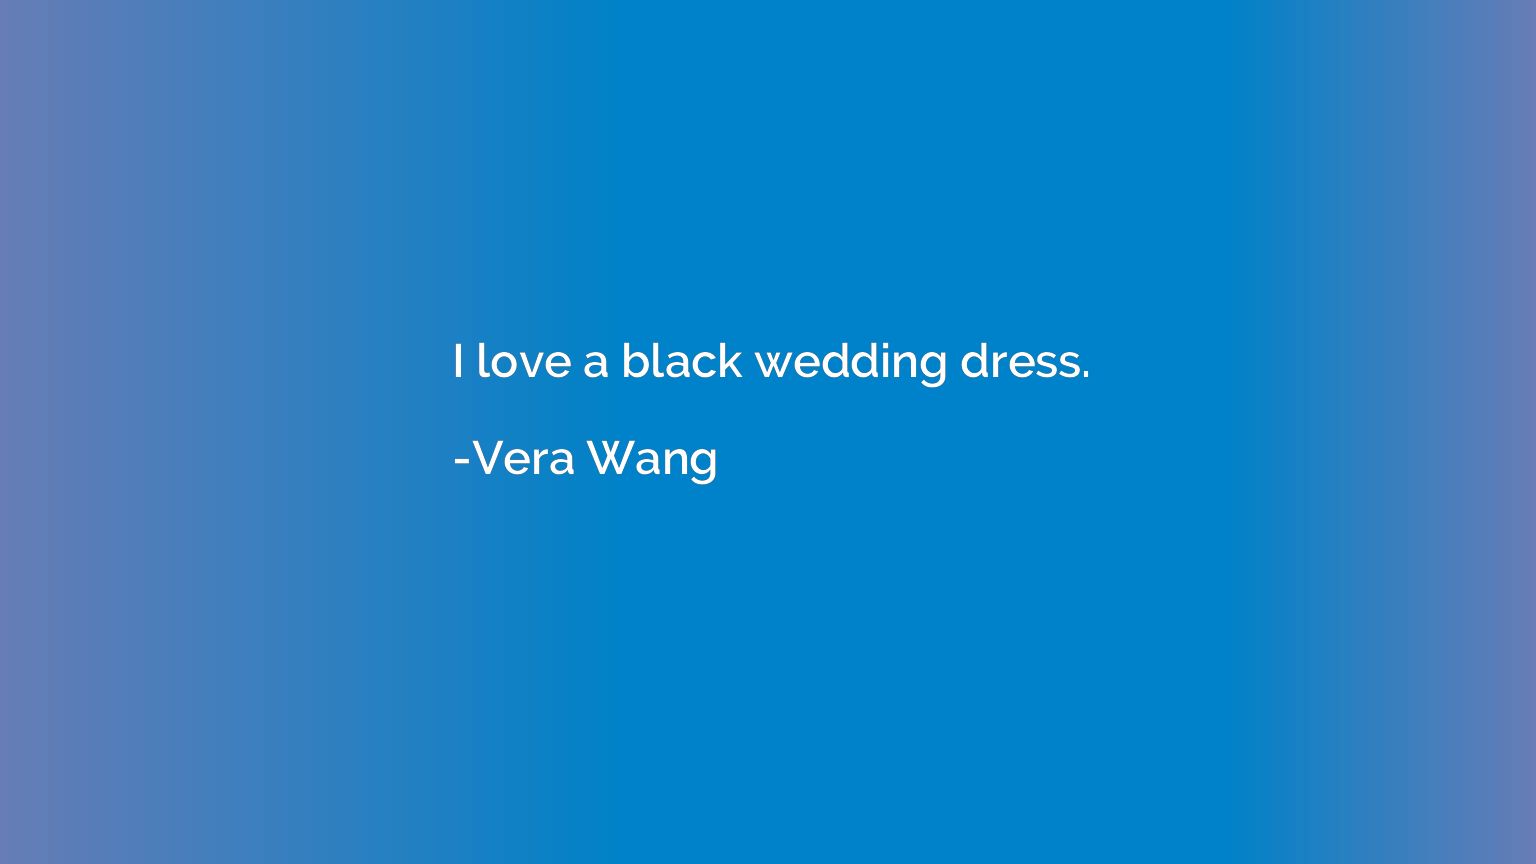 I love a black wedding dress.